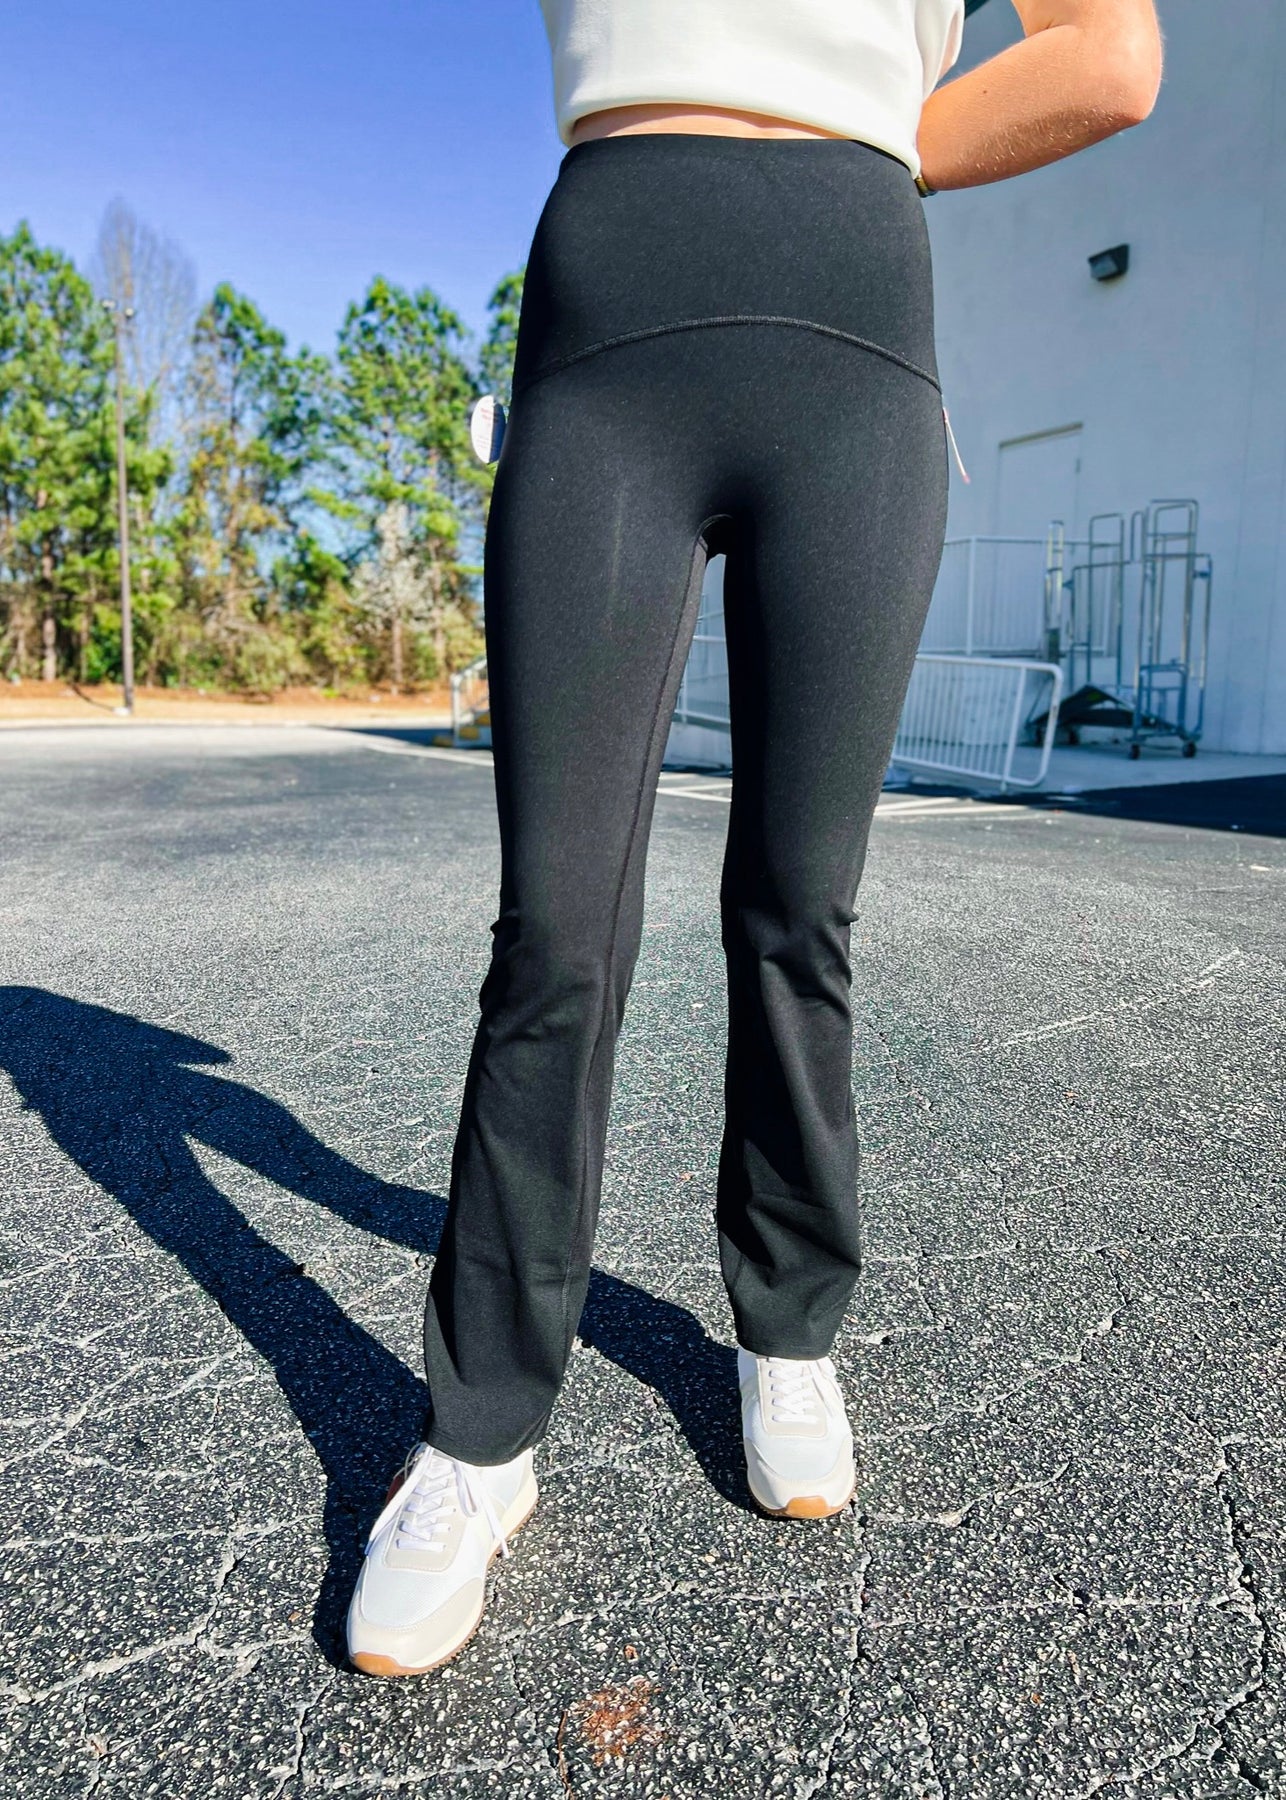 MAX & MIA Women's Black Yoga Pants Sweatpants Leggings Size L